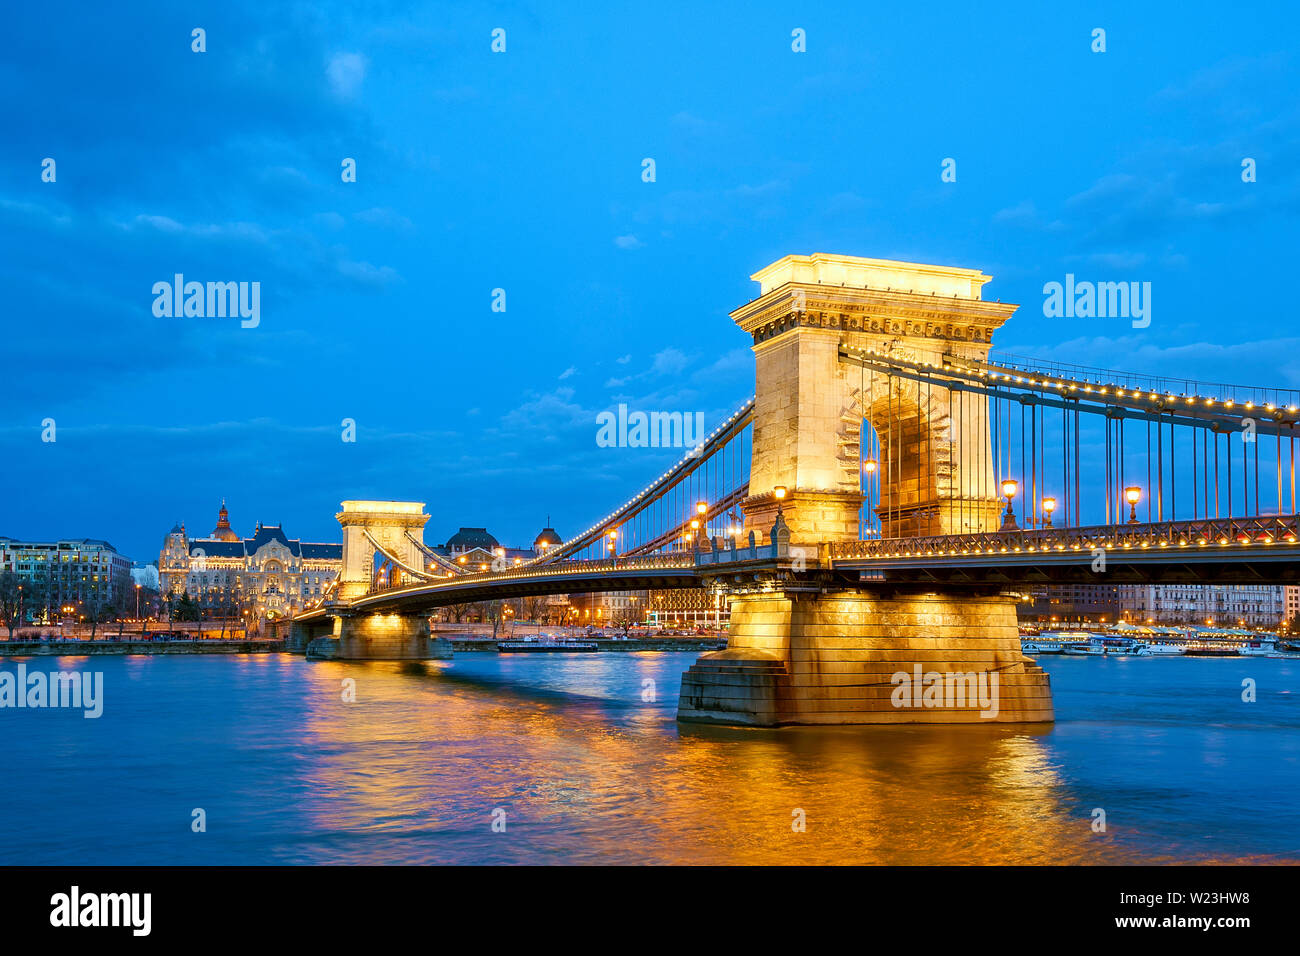 Ponte delle catene Budapest Szechenyi lanchid Gresham Palace Four Seasons Hotel Danubio Ungheria Foto Stock